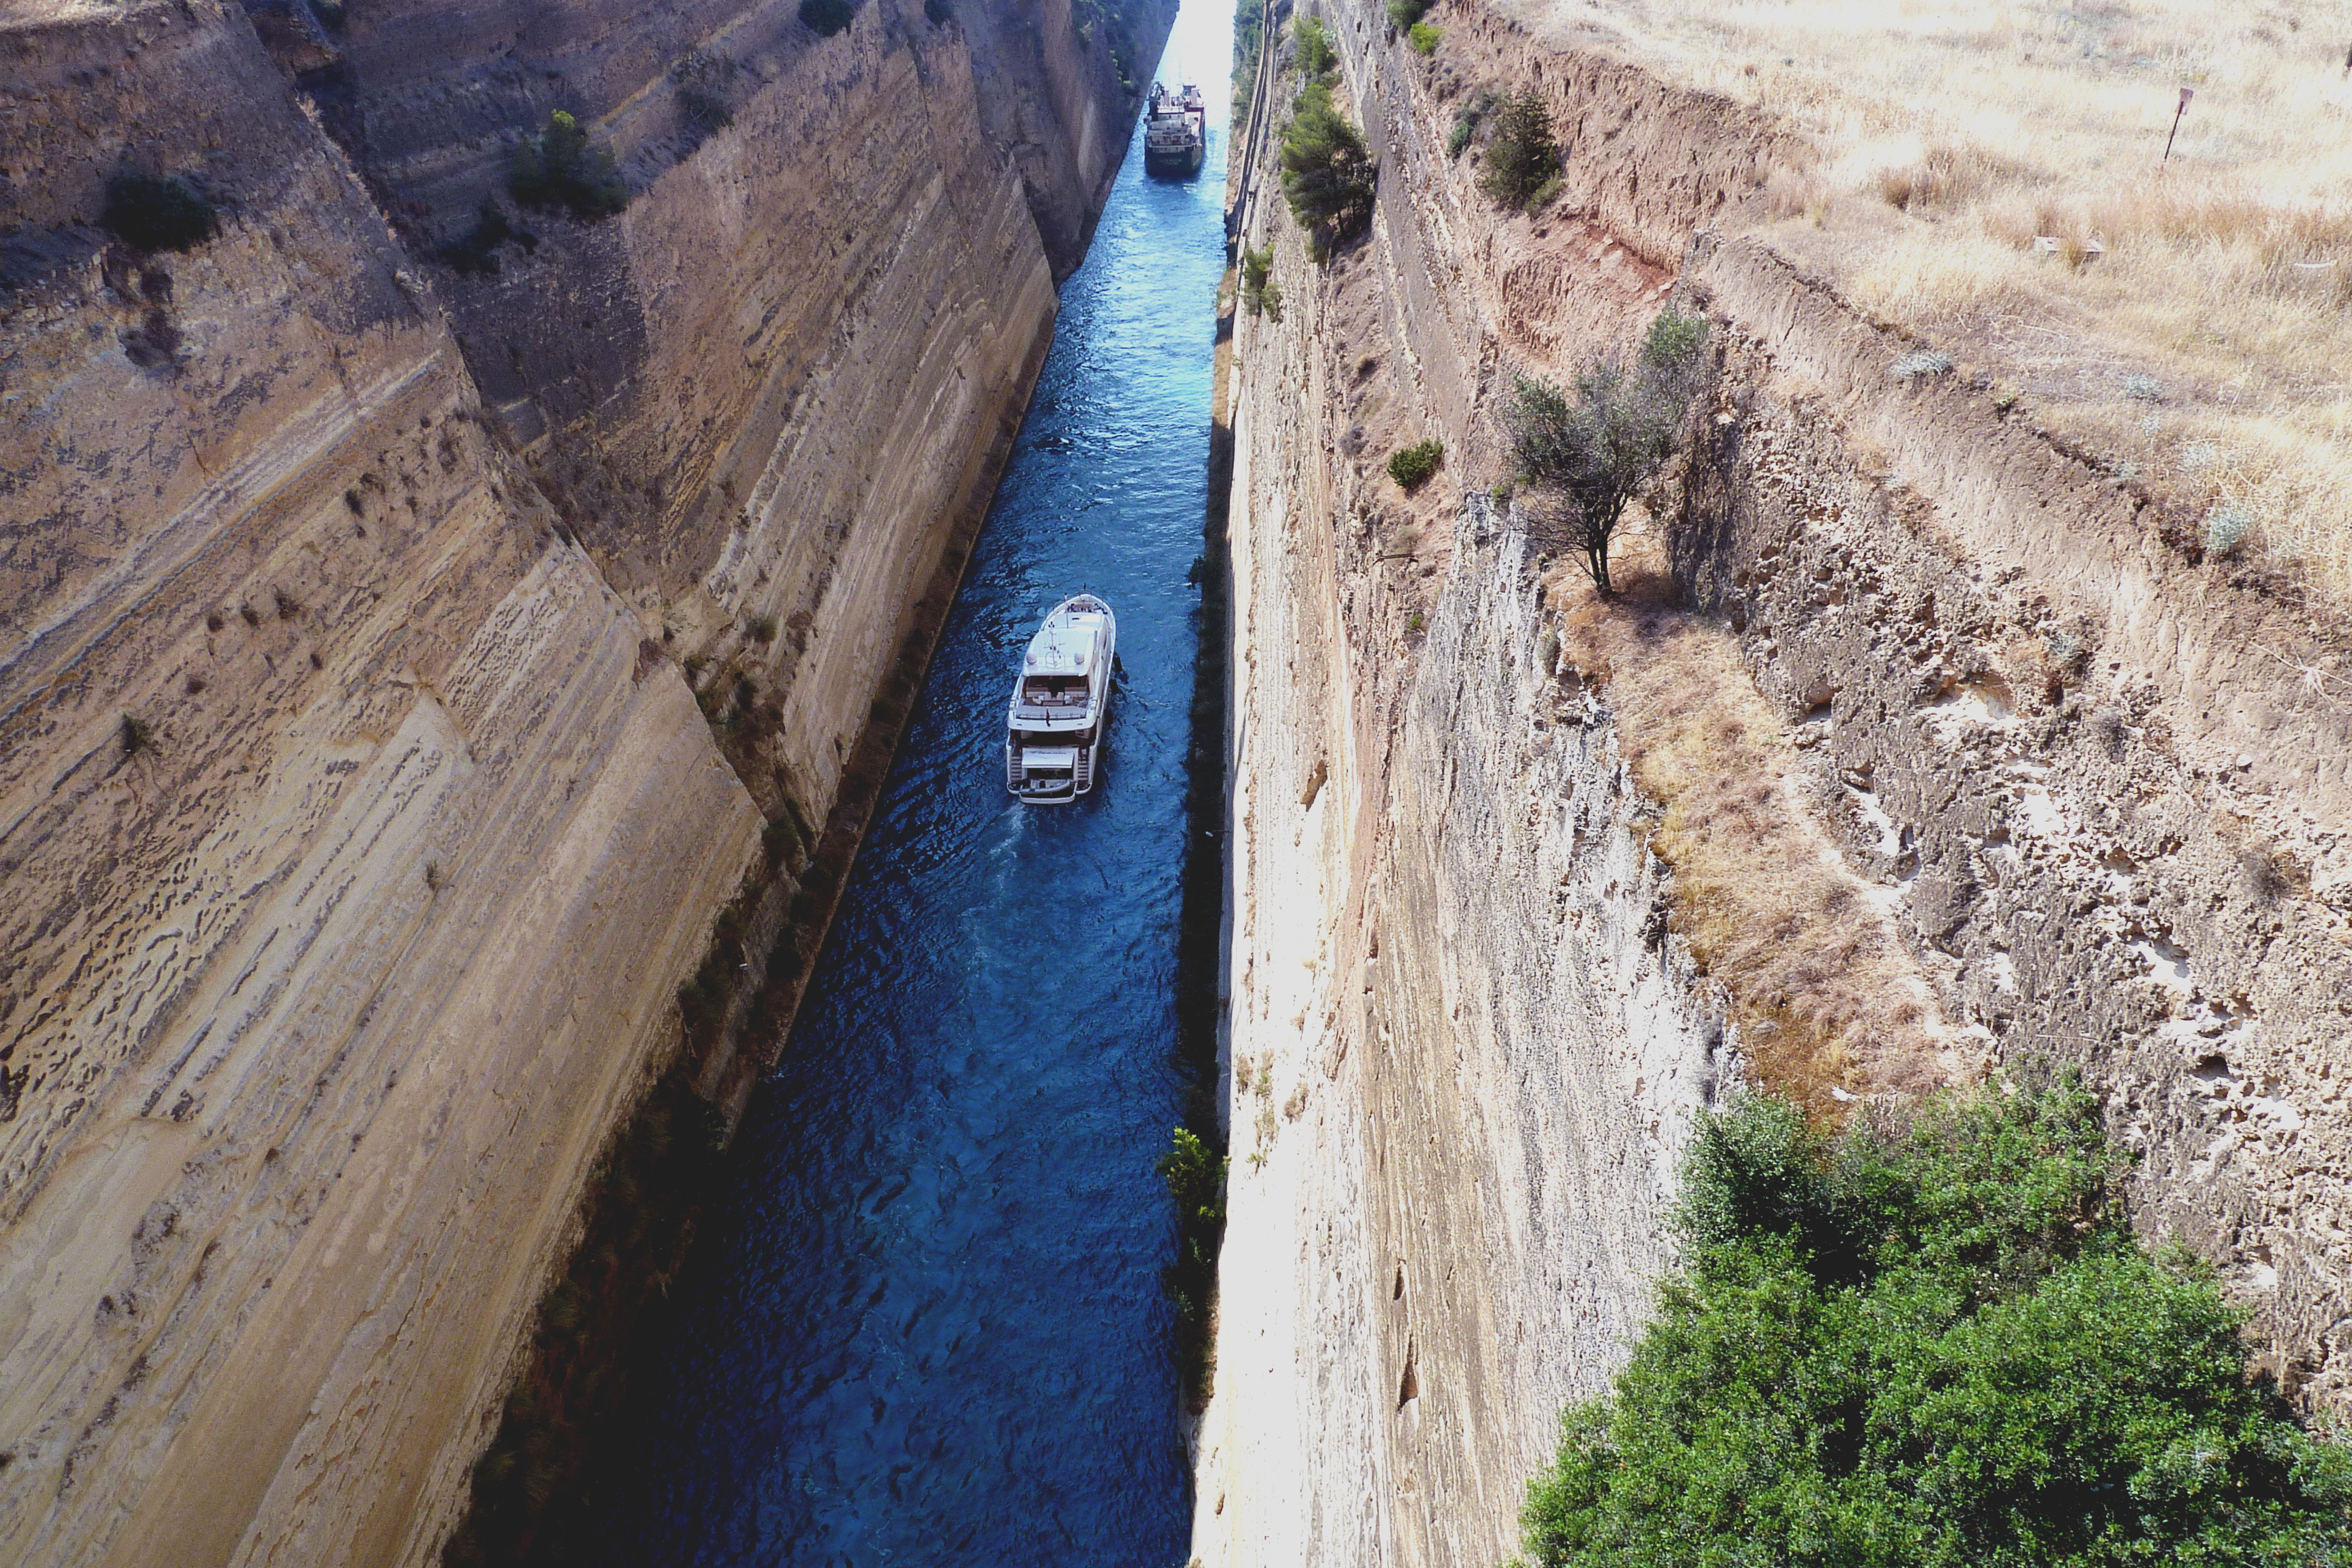 Day 2, Greece: Corinth Canal